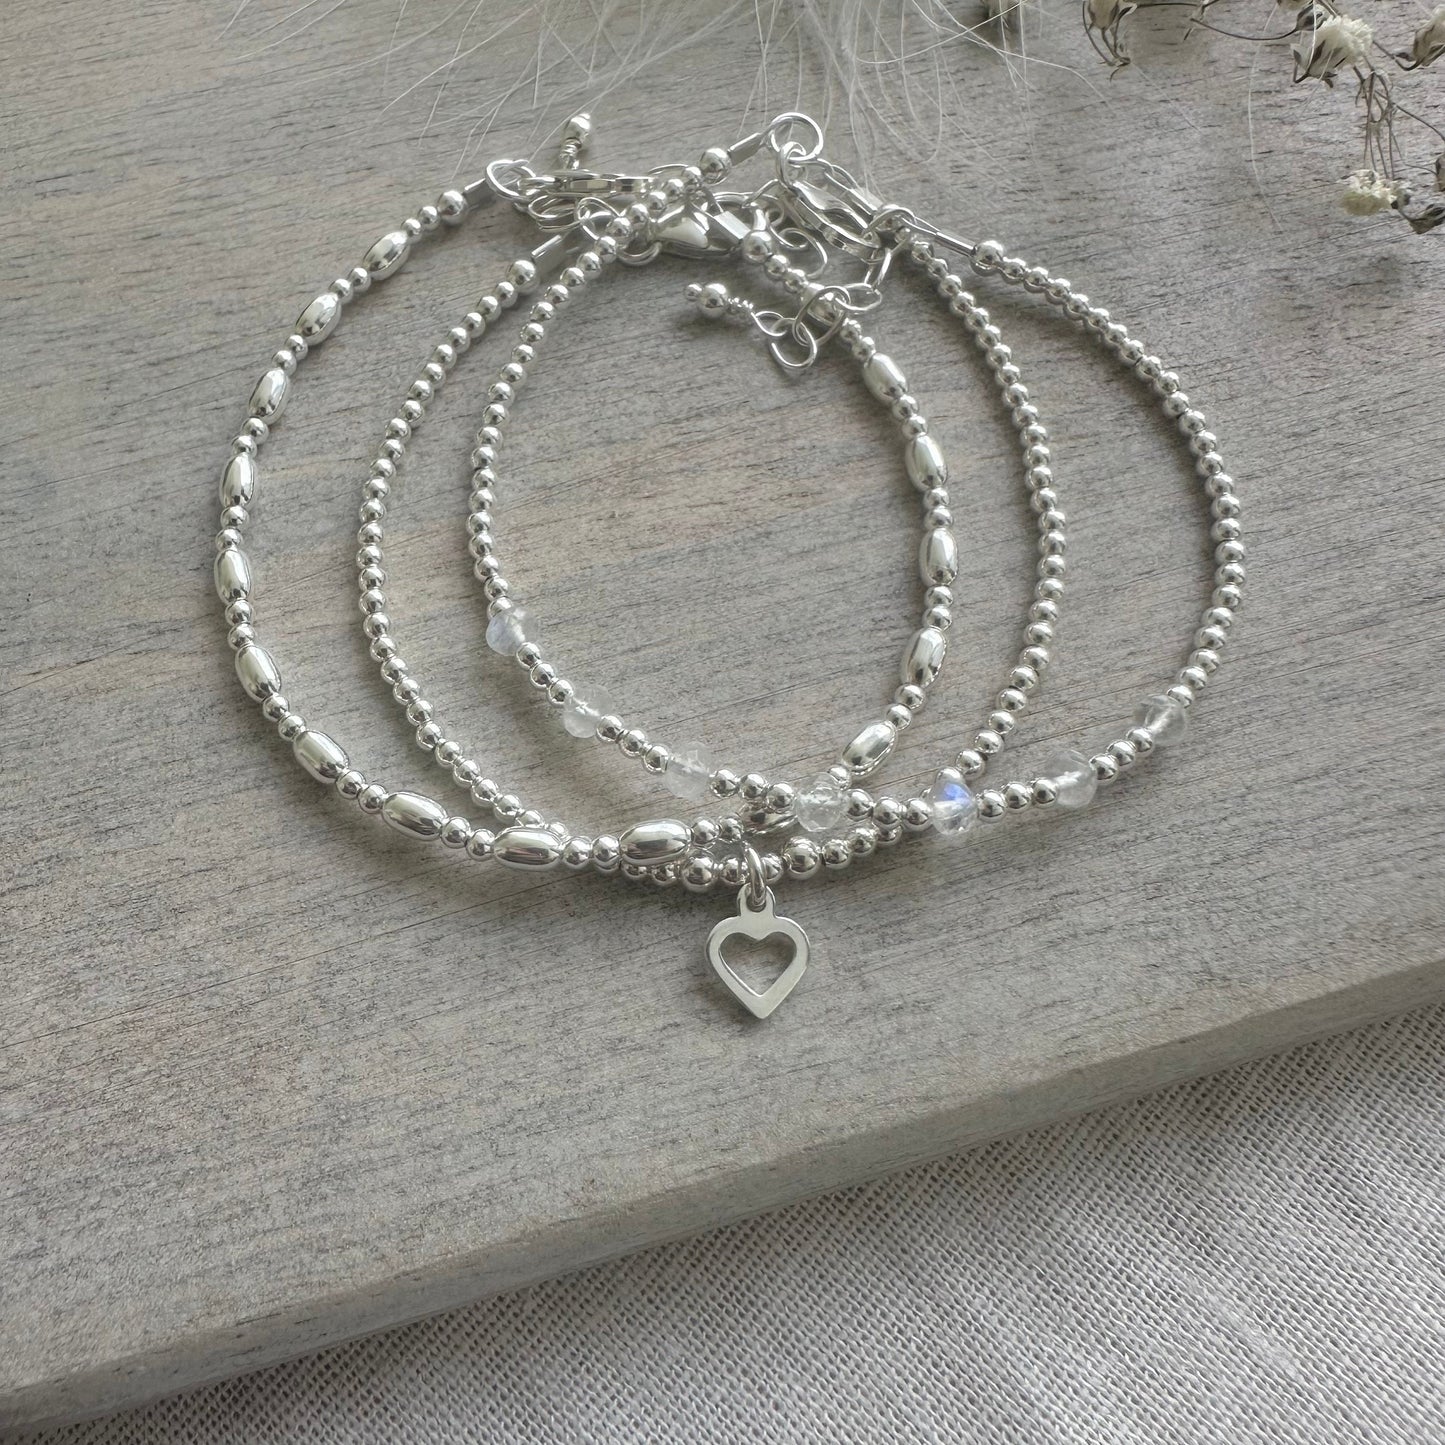 A Dainty June Birthstone Moonstone Bracelet Set, June Stacking Bracelets for Women in Sterling Silver